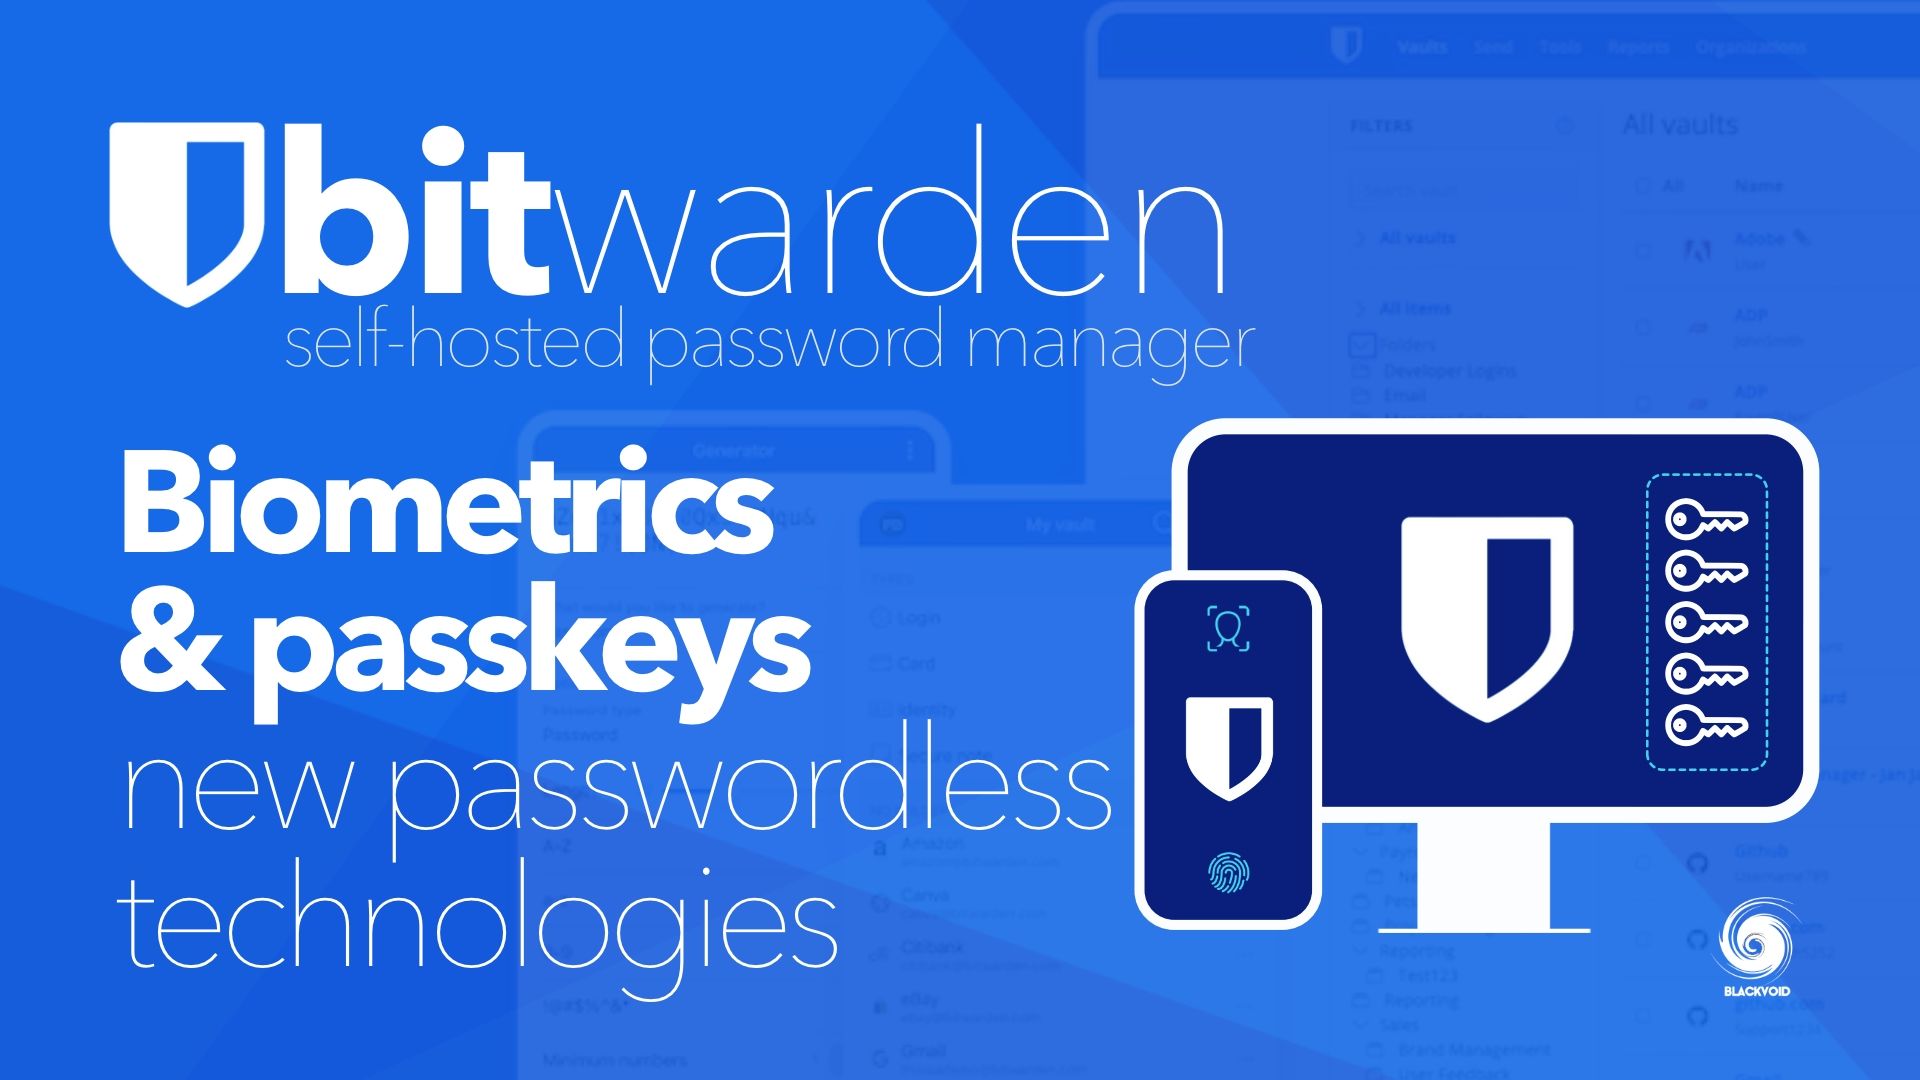 Bitwarden biometrics & passkeys - new passwordless technologies